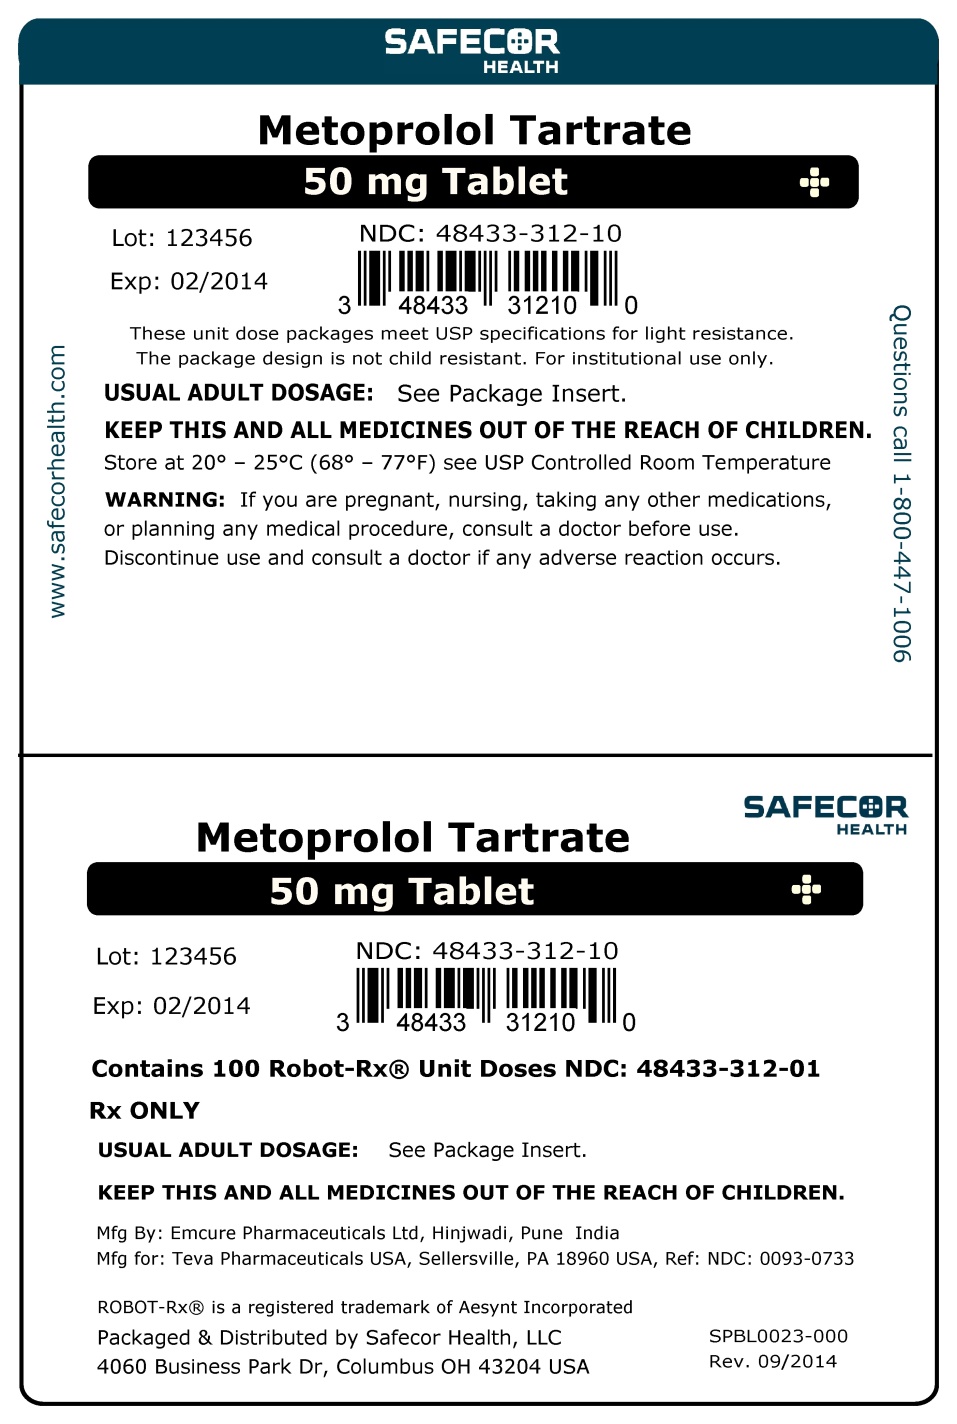 Metoprolol Tartrate 50 mg Robot Unit Dose Box Label